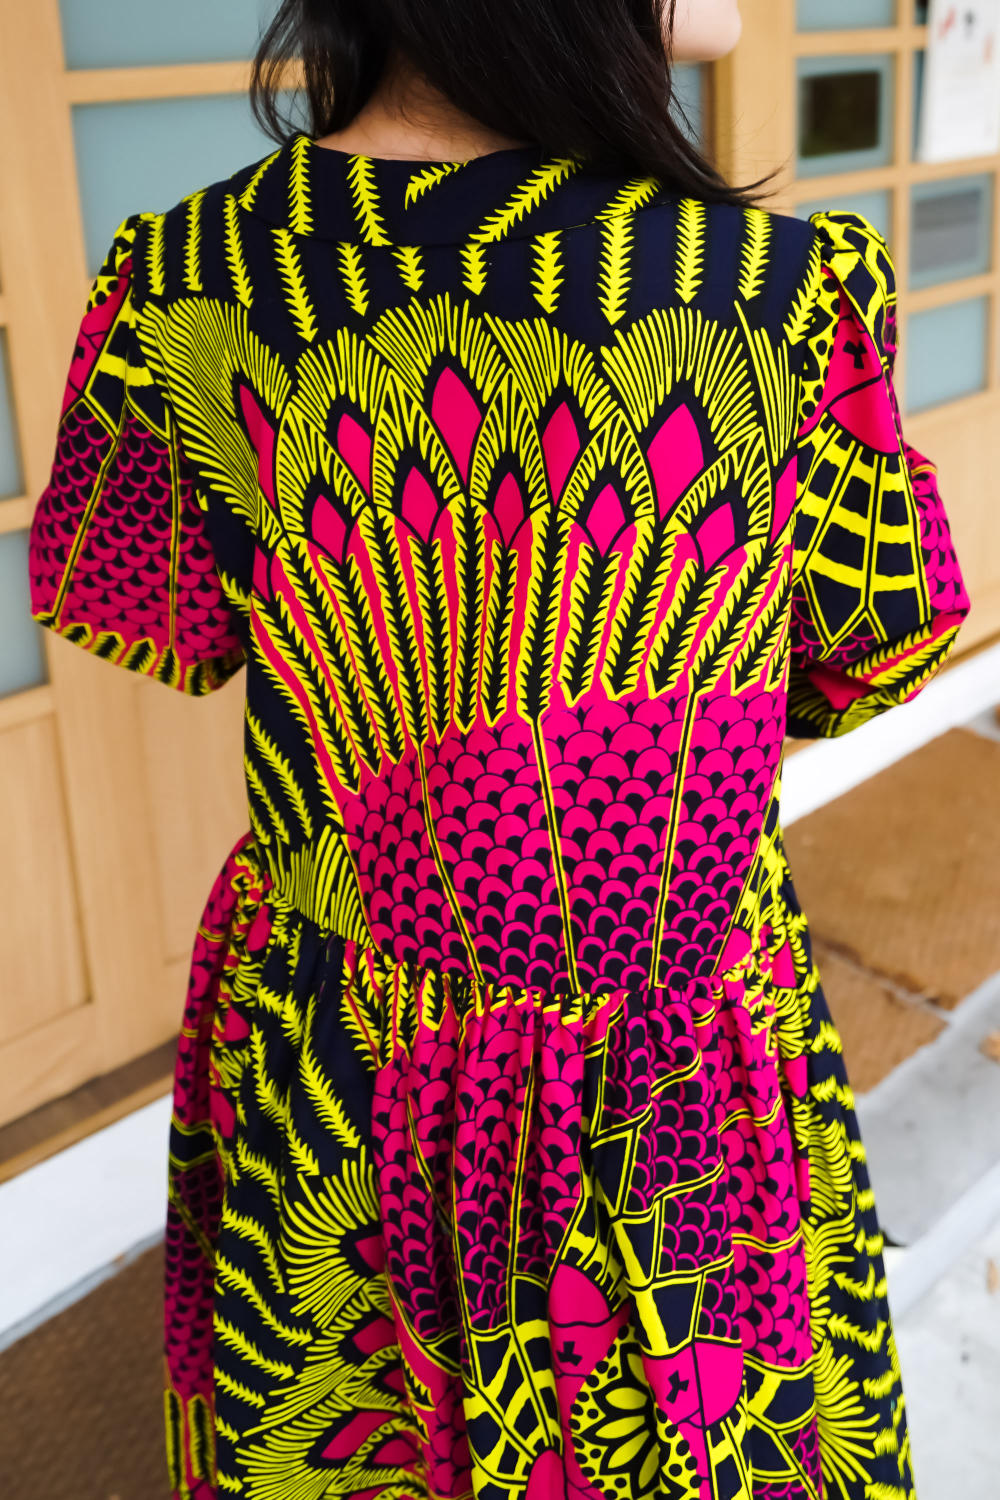 Asali Maxi Smock Dress - Pink Blue Yellow Peacock African Ankara Wax Cotton Print